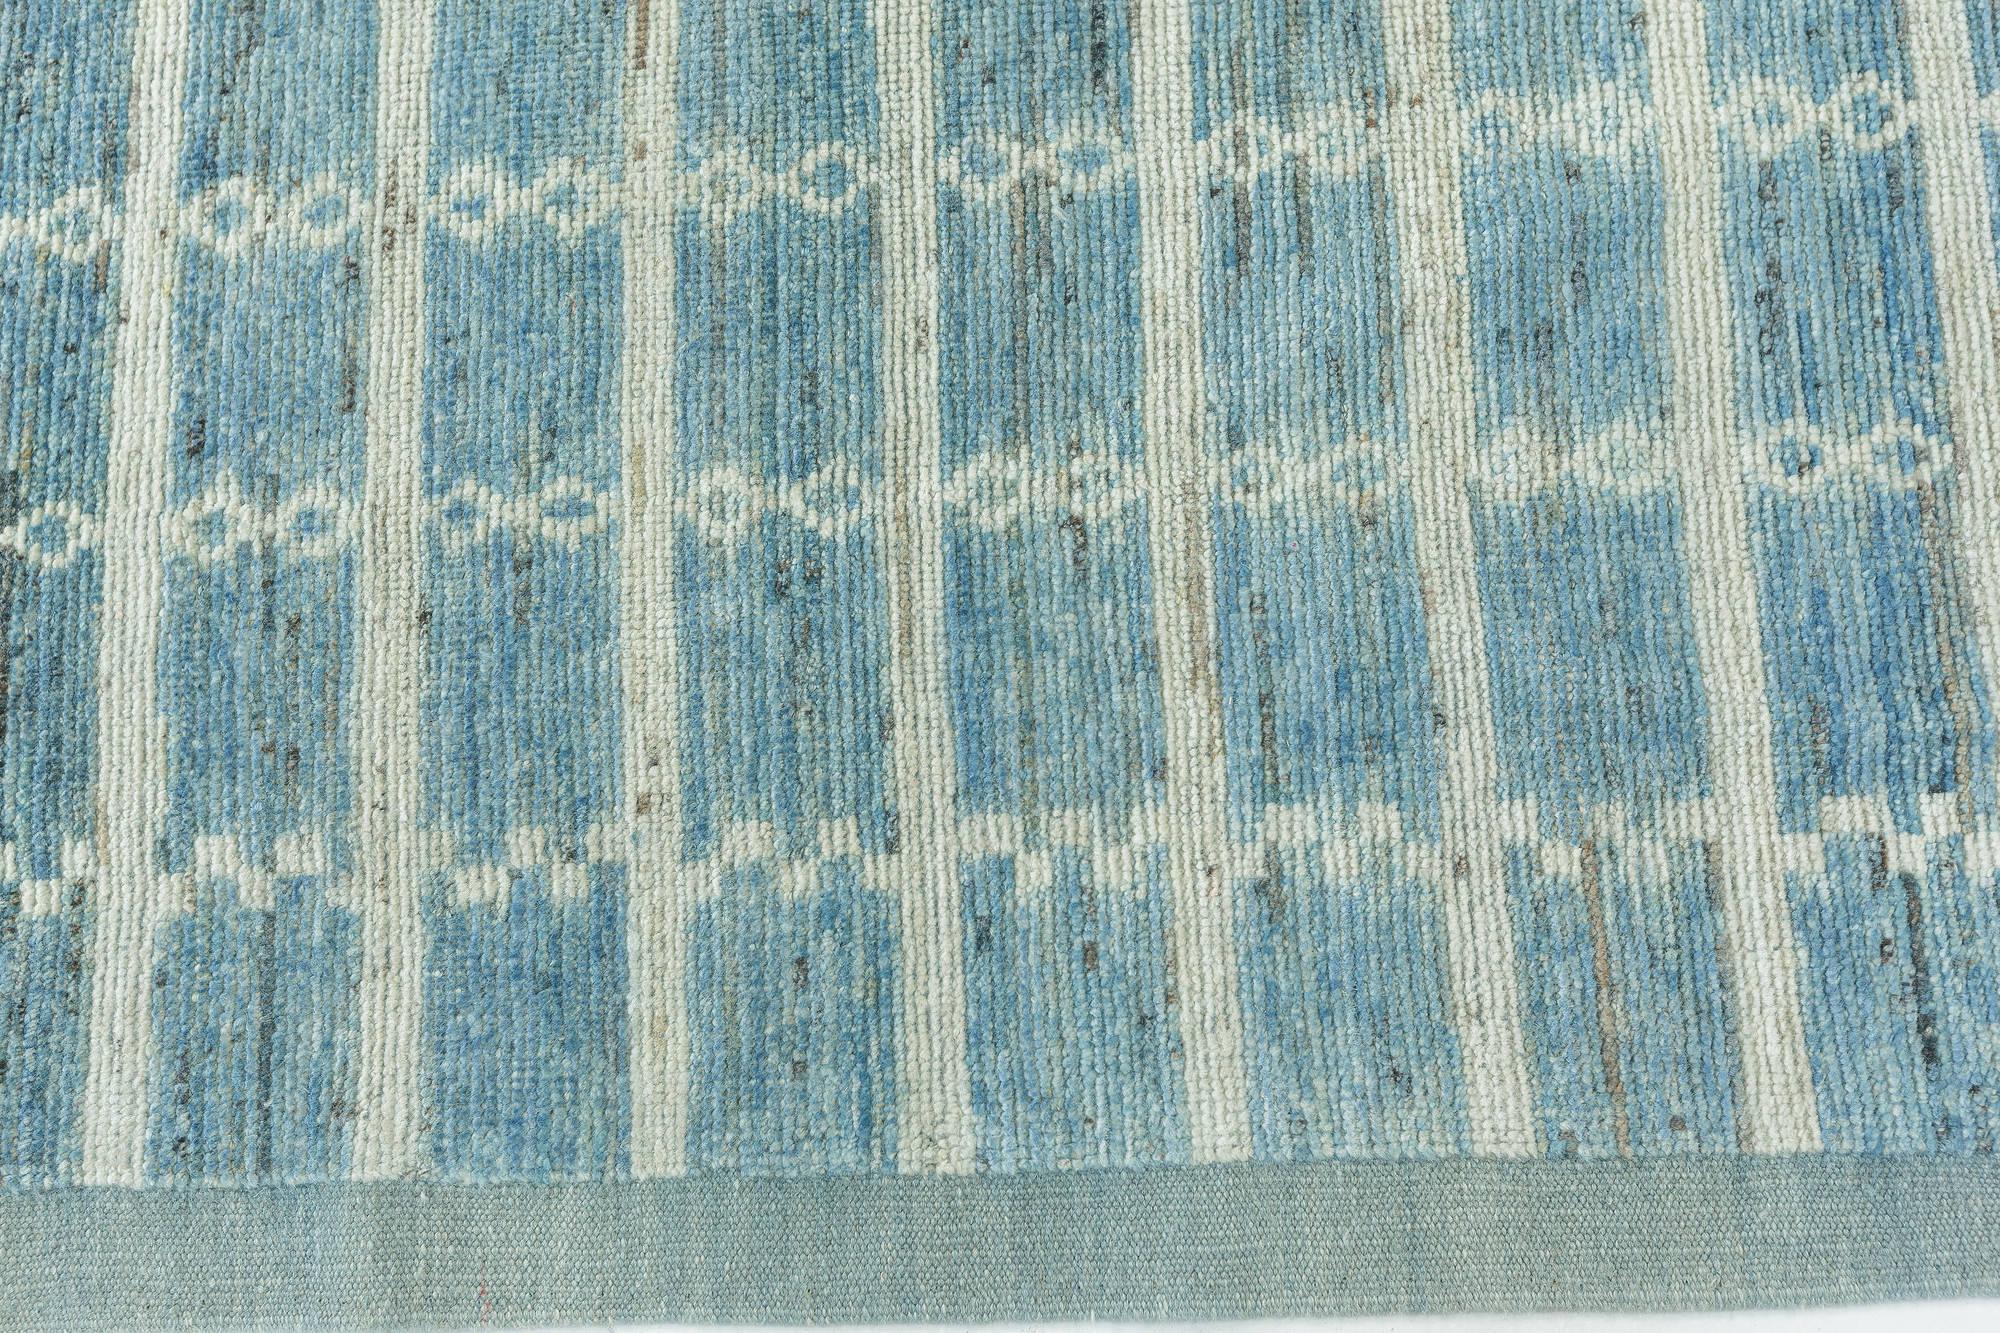 Modern Blue Pergolas Rug by Doris Leslie Blau
Size: 15'2